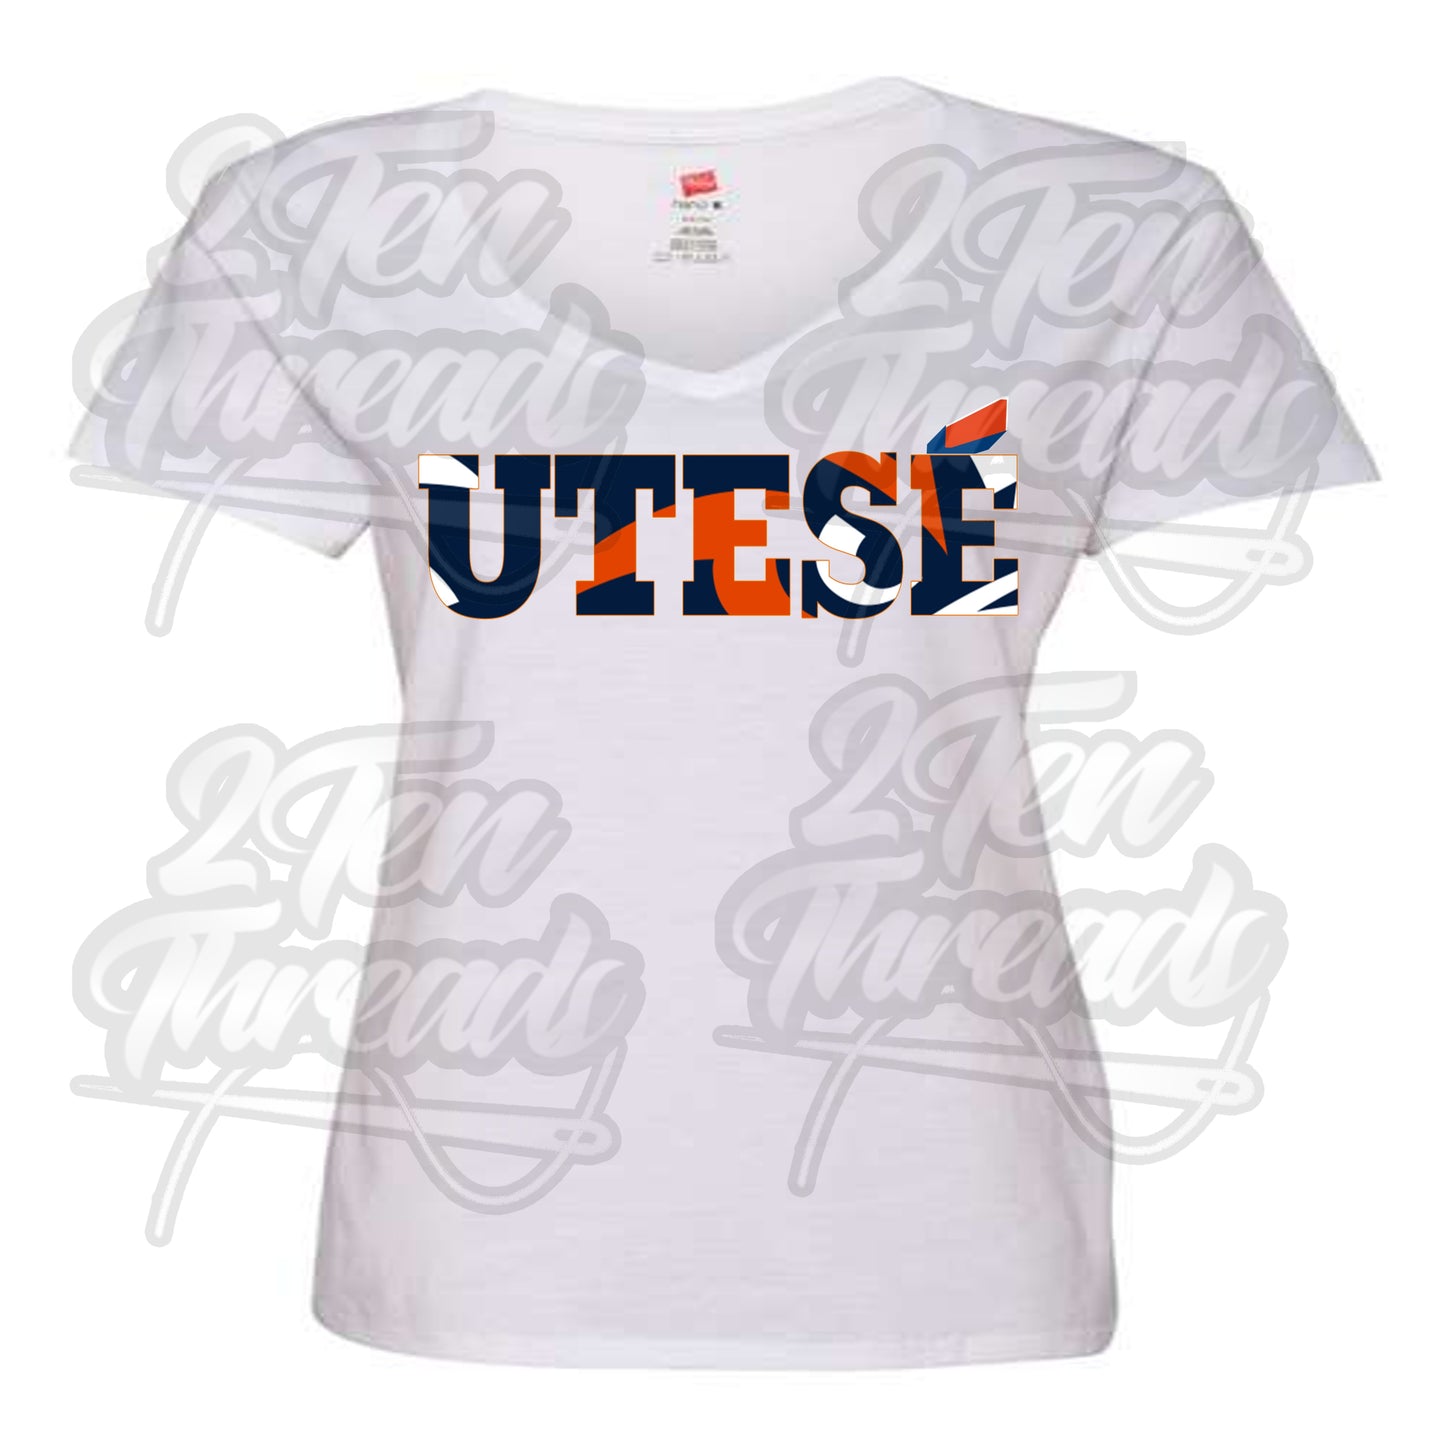 UTESE Shirt